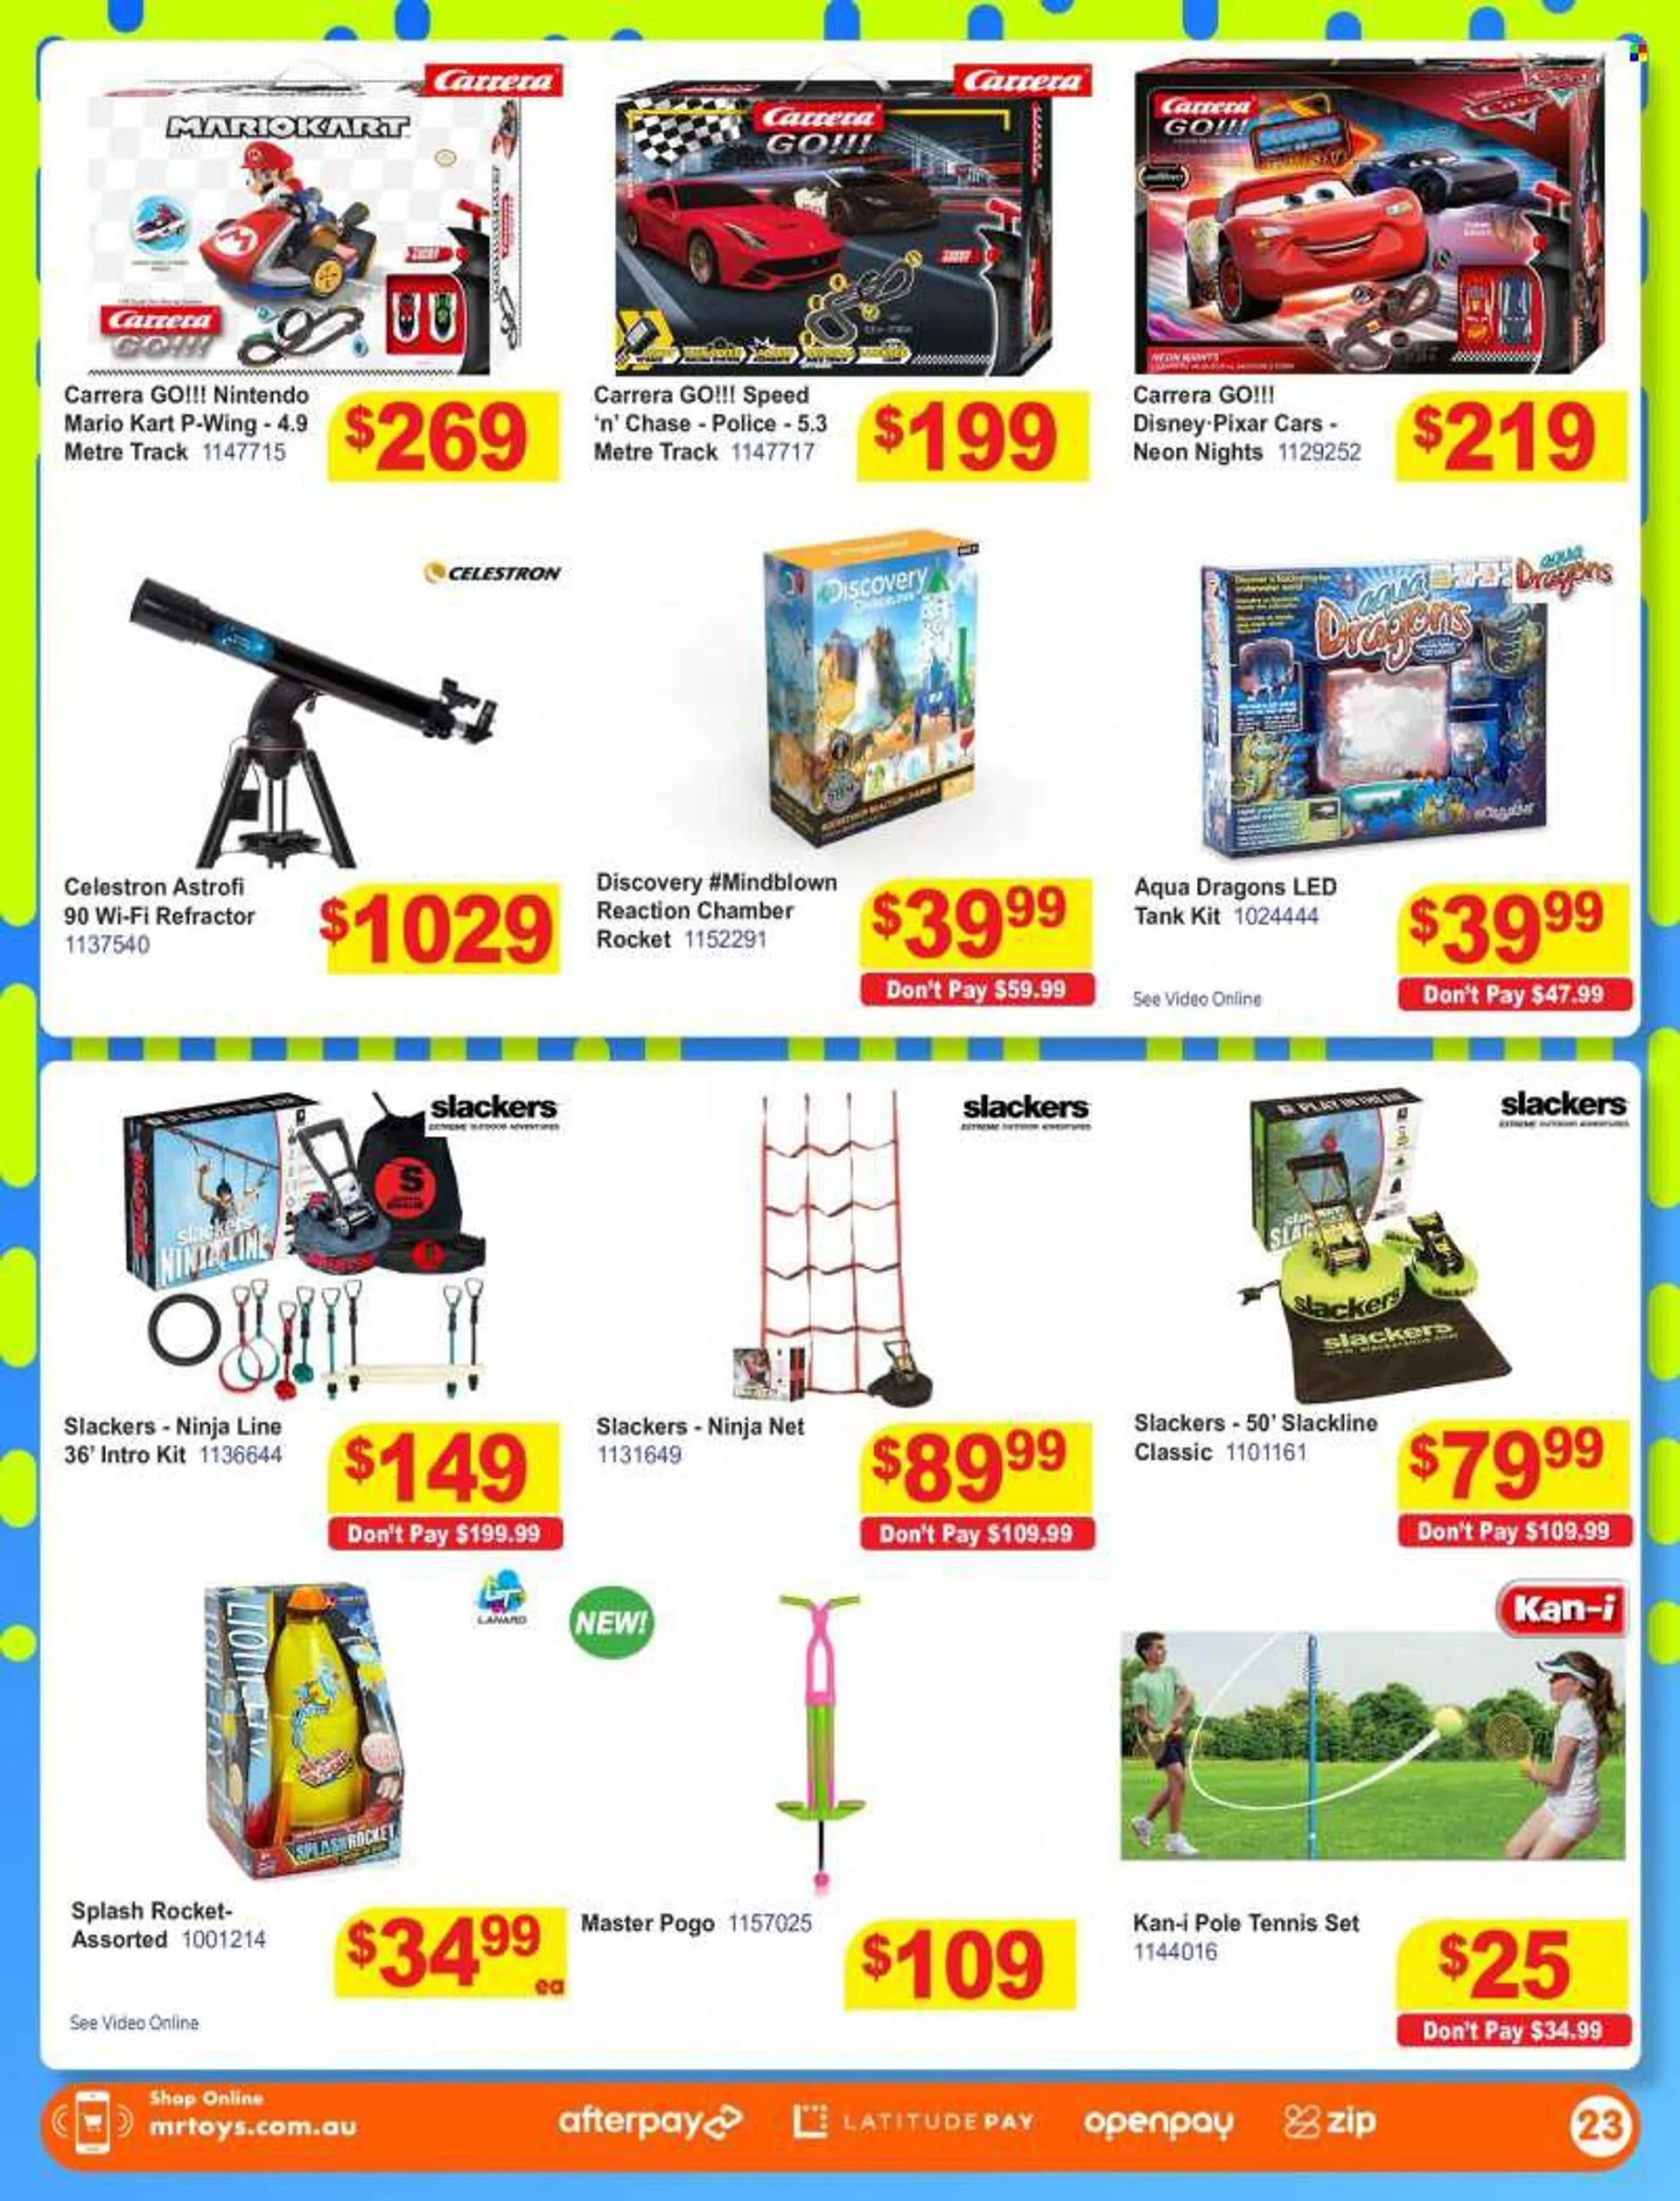 Mr Toys Catalogue - 9 Jun 2022 - 17 Jul 2022 - Sales products - Disney, Carrera. Page 23.